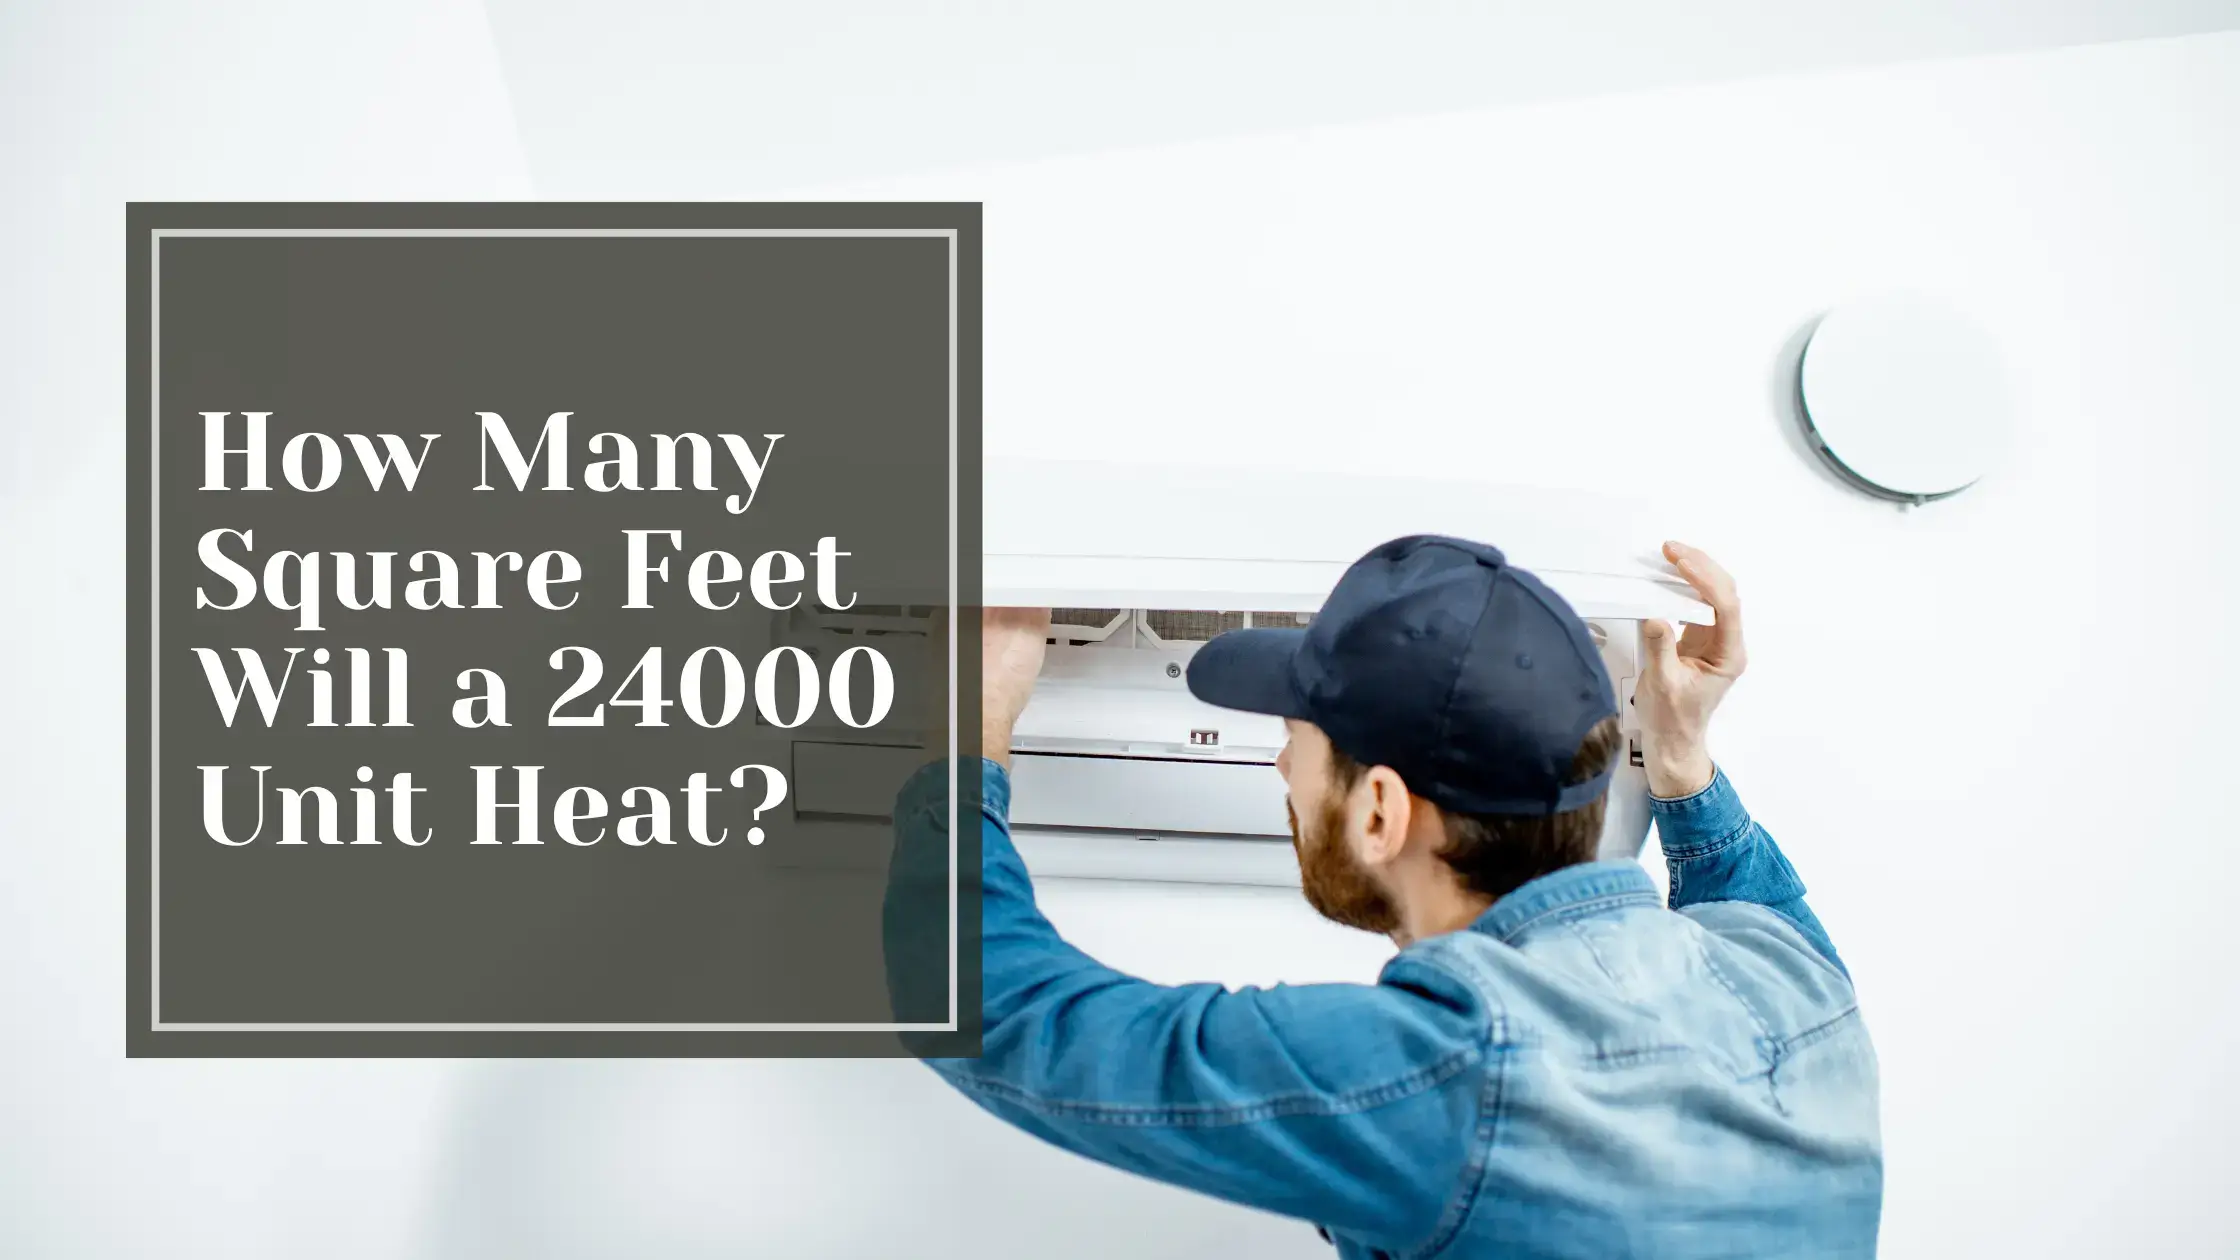 How Many Square Feet Will a 24,000 Unit Heat?